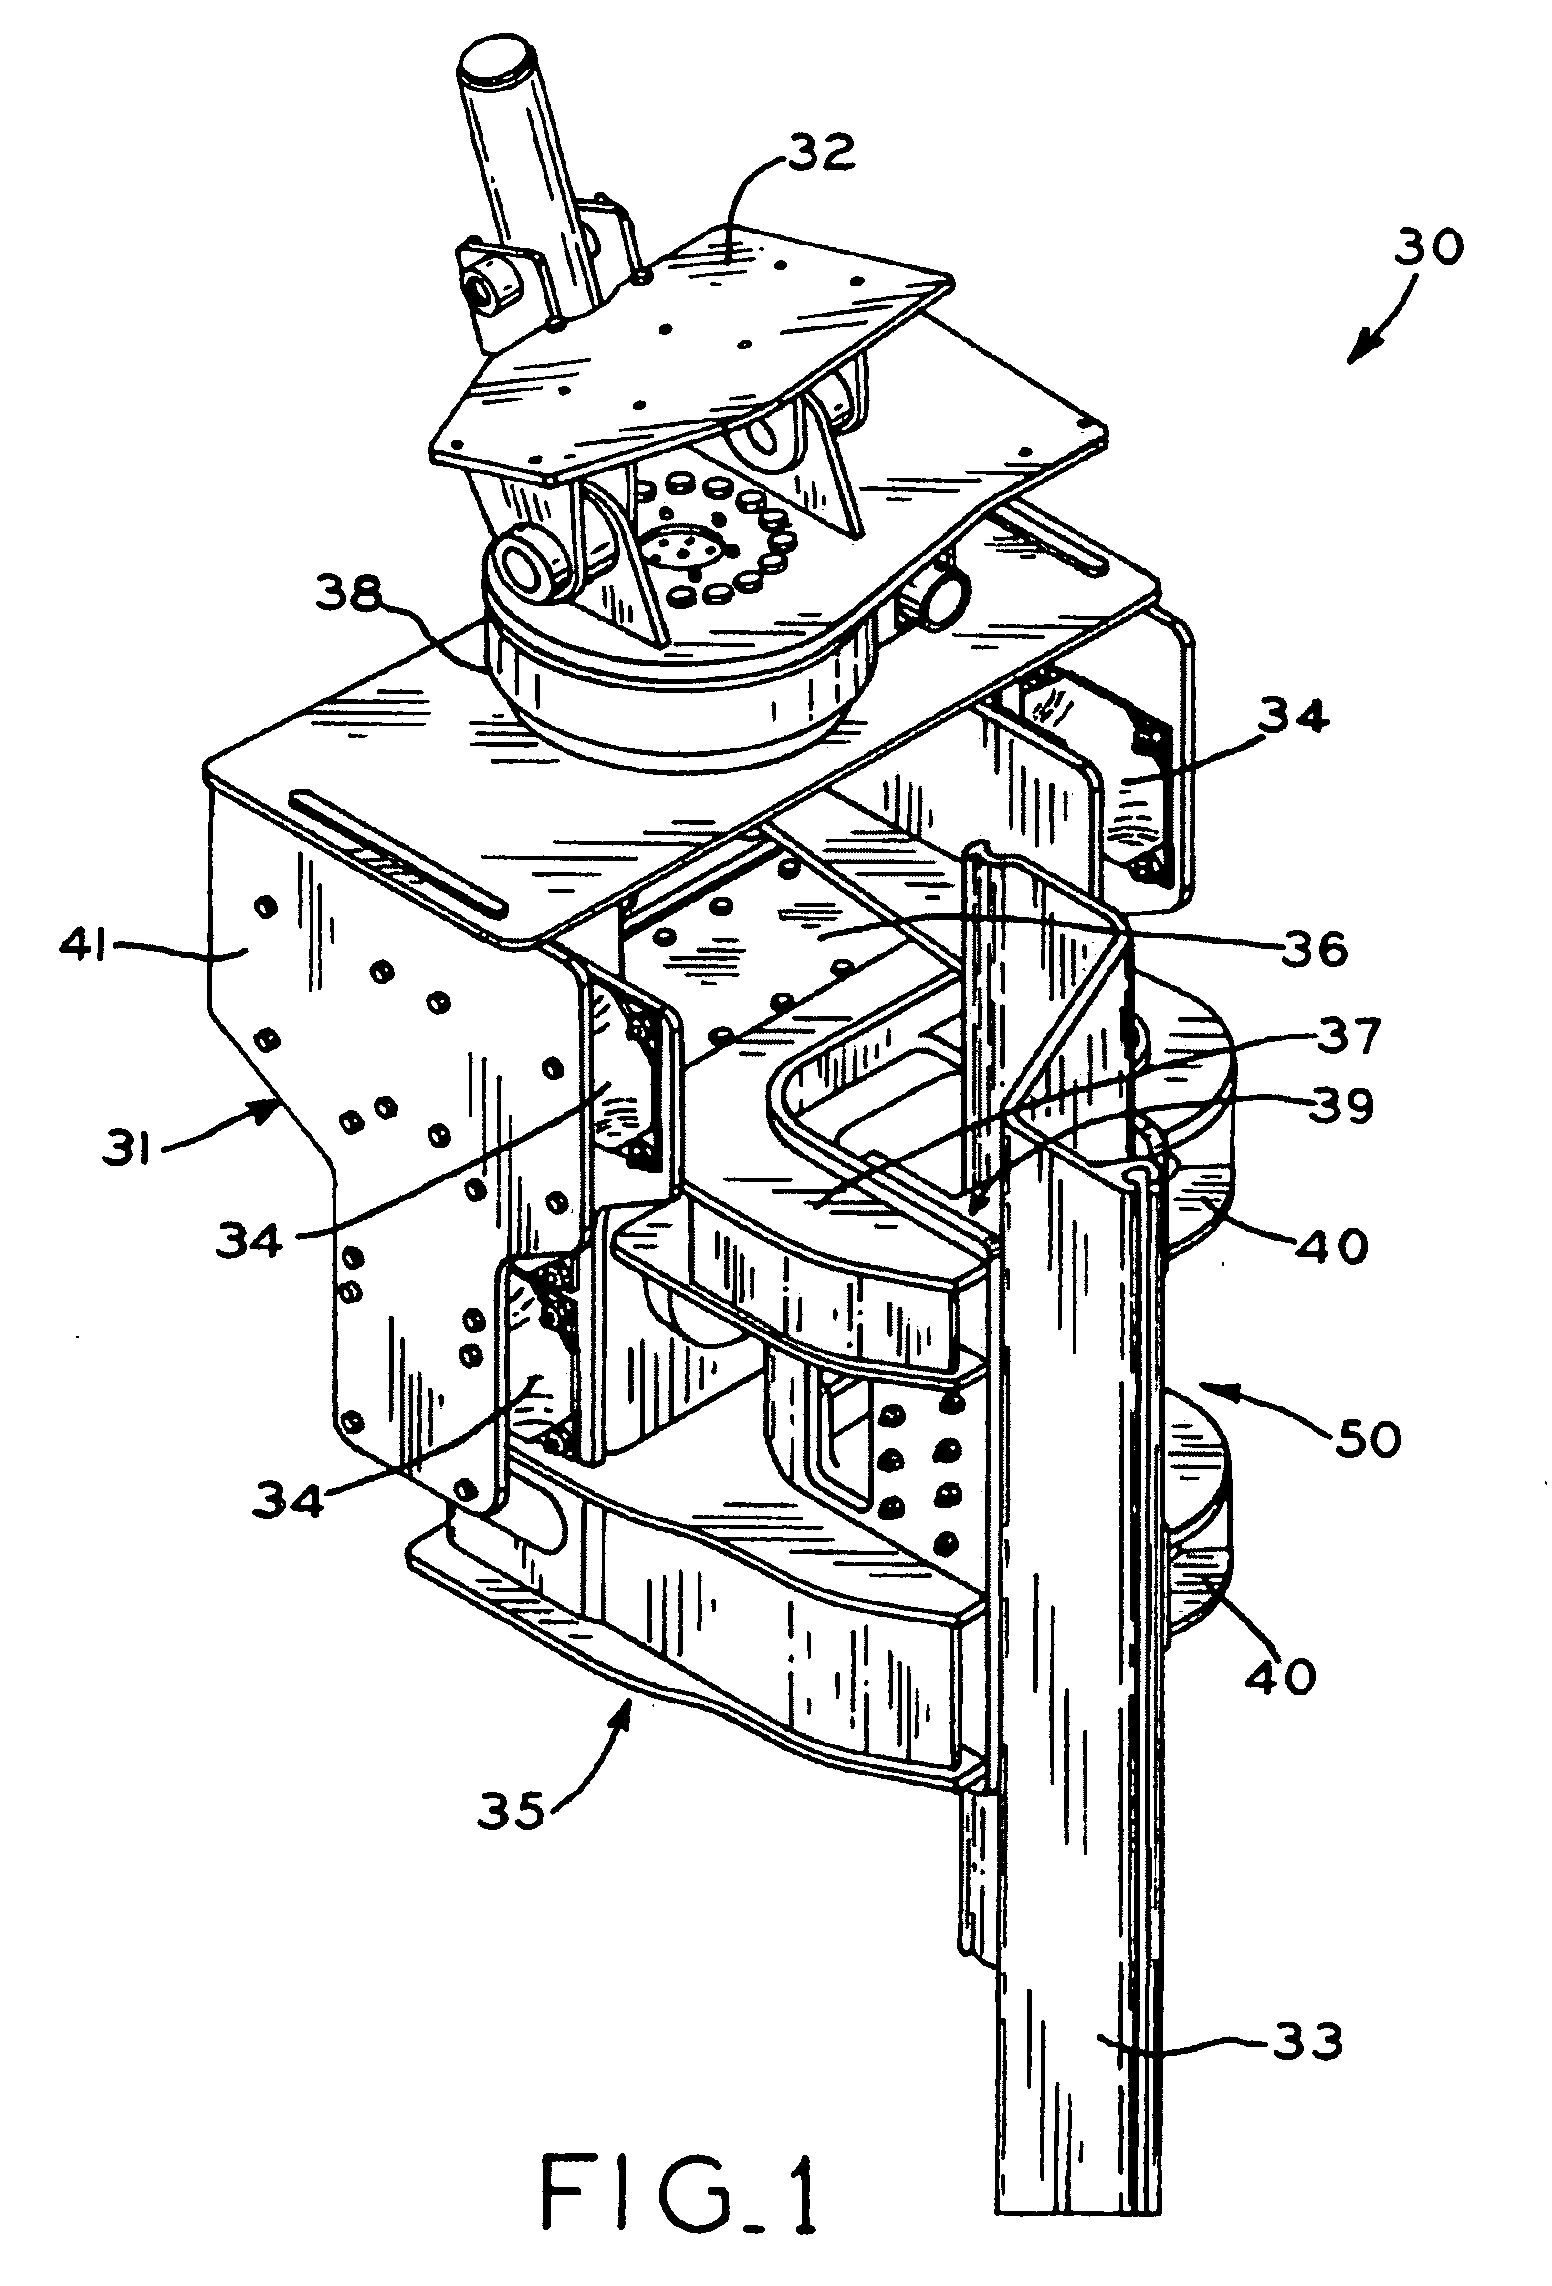 Modular vibratory pile driver system